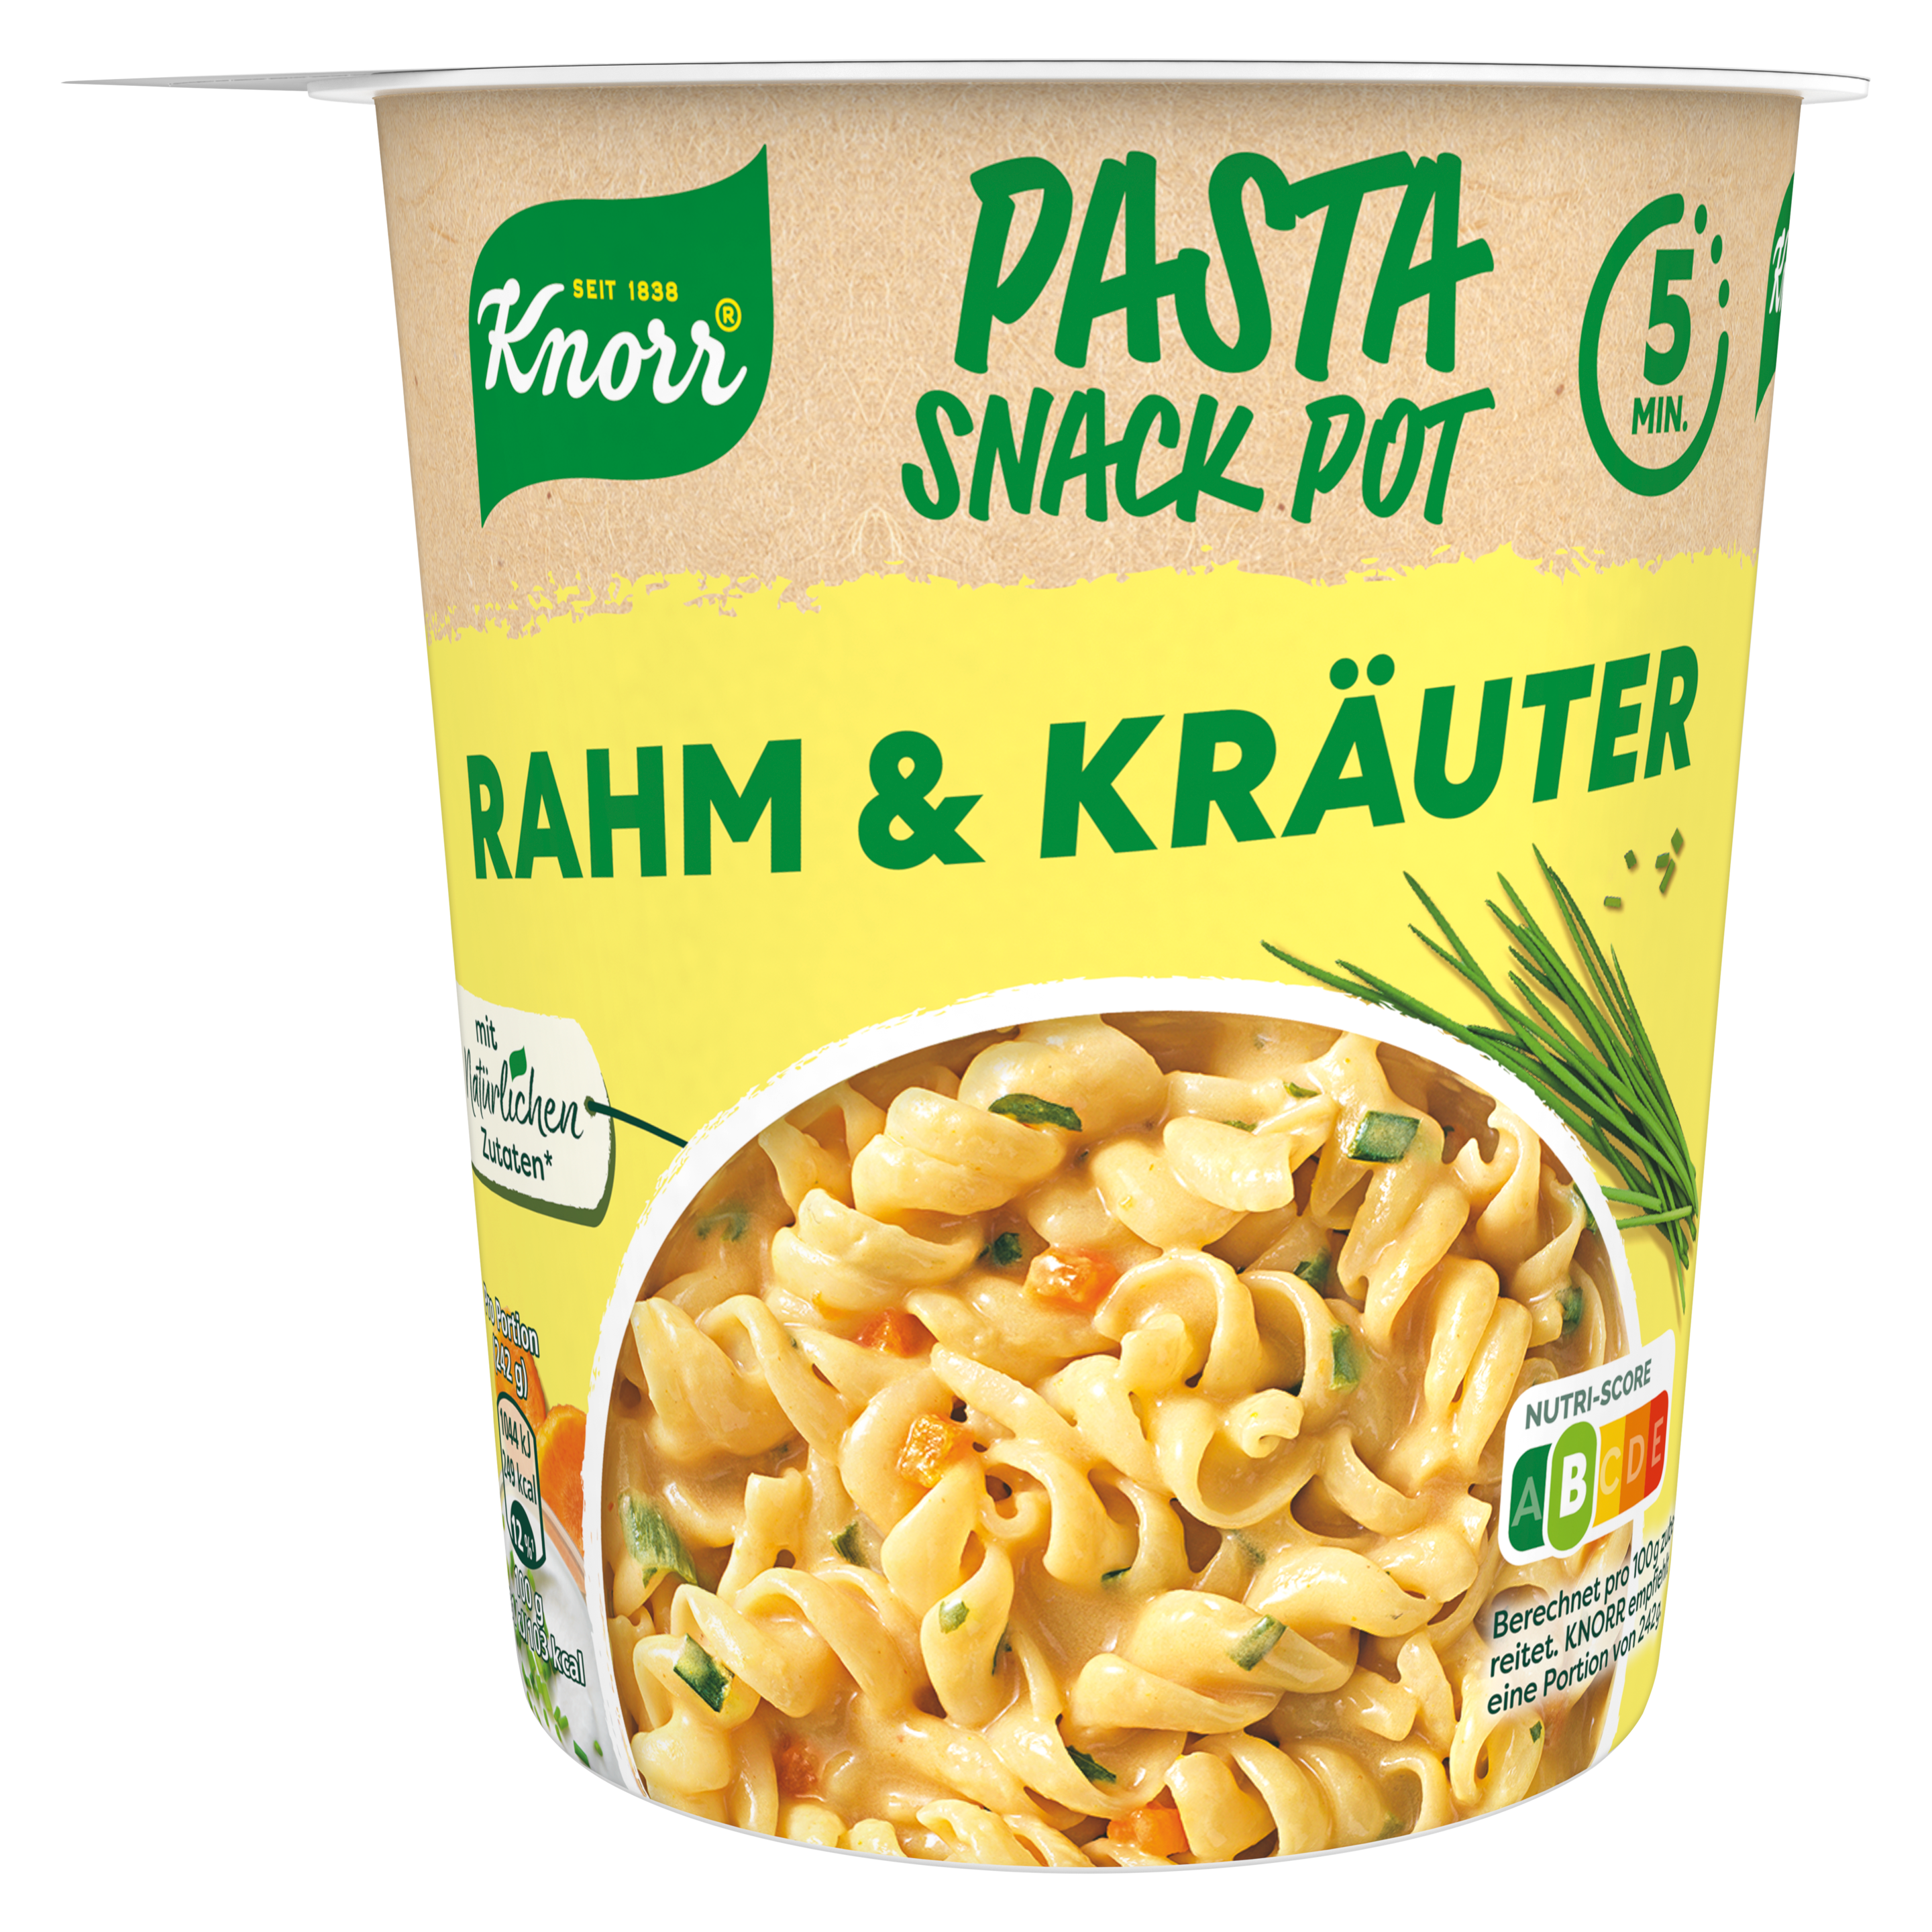 Knorr Pasta Snack Pot Rahm & Kräuter 62g Becher